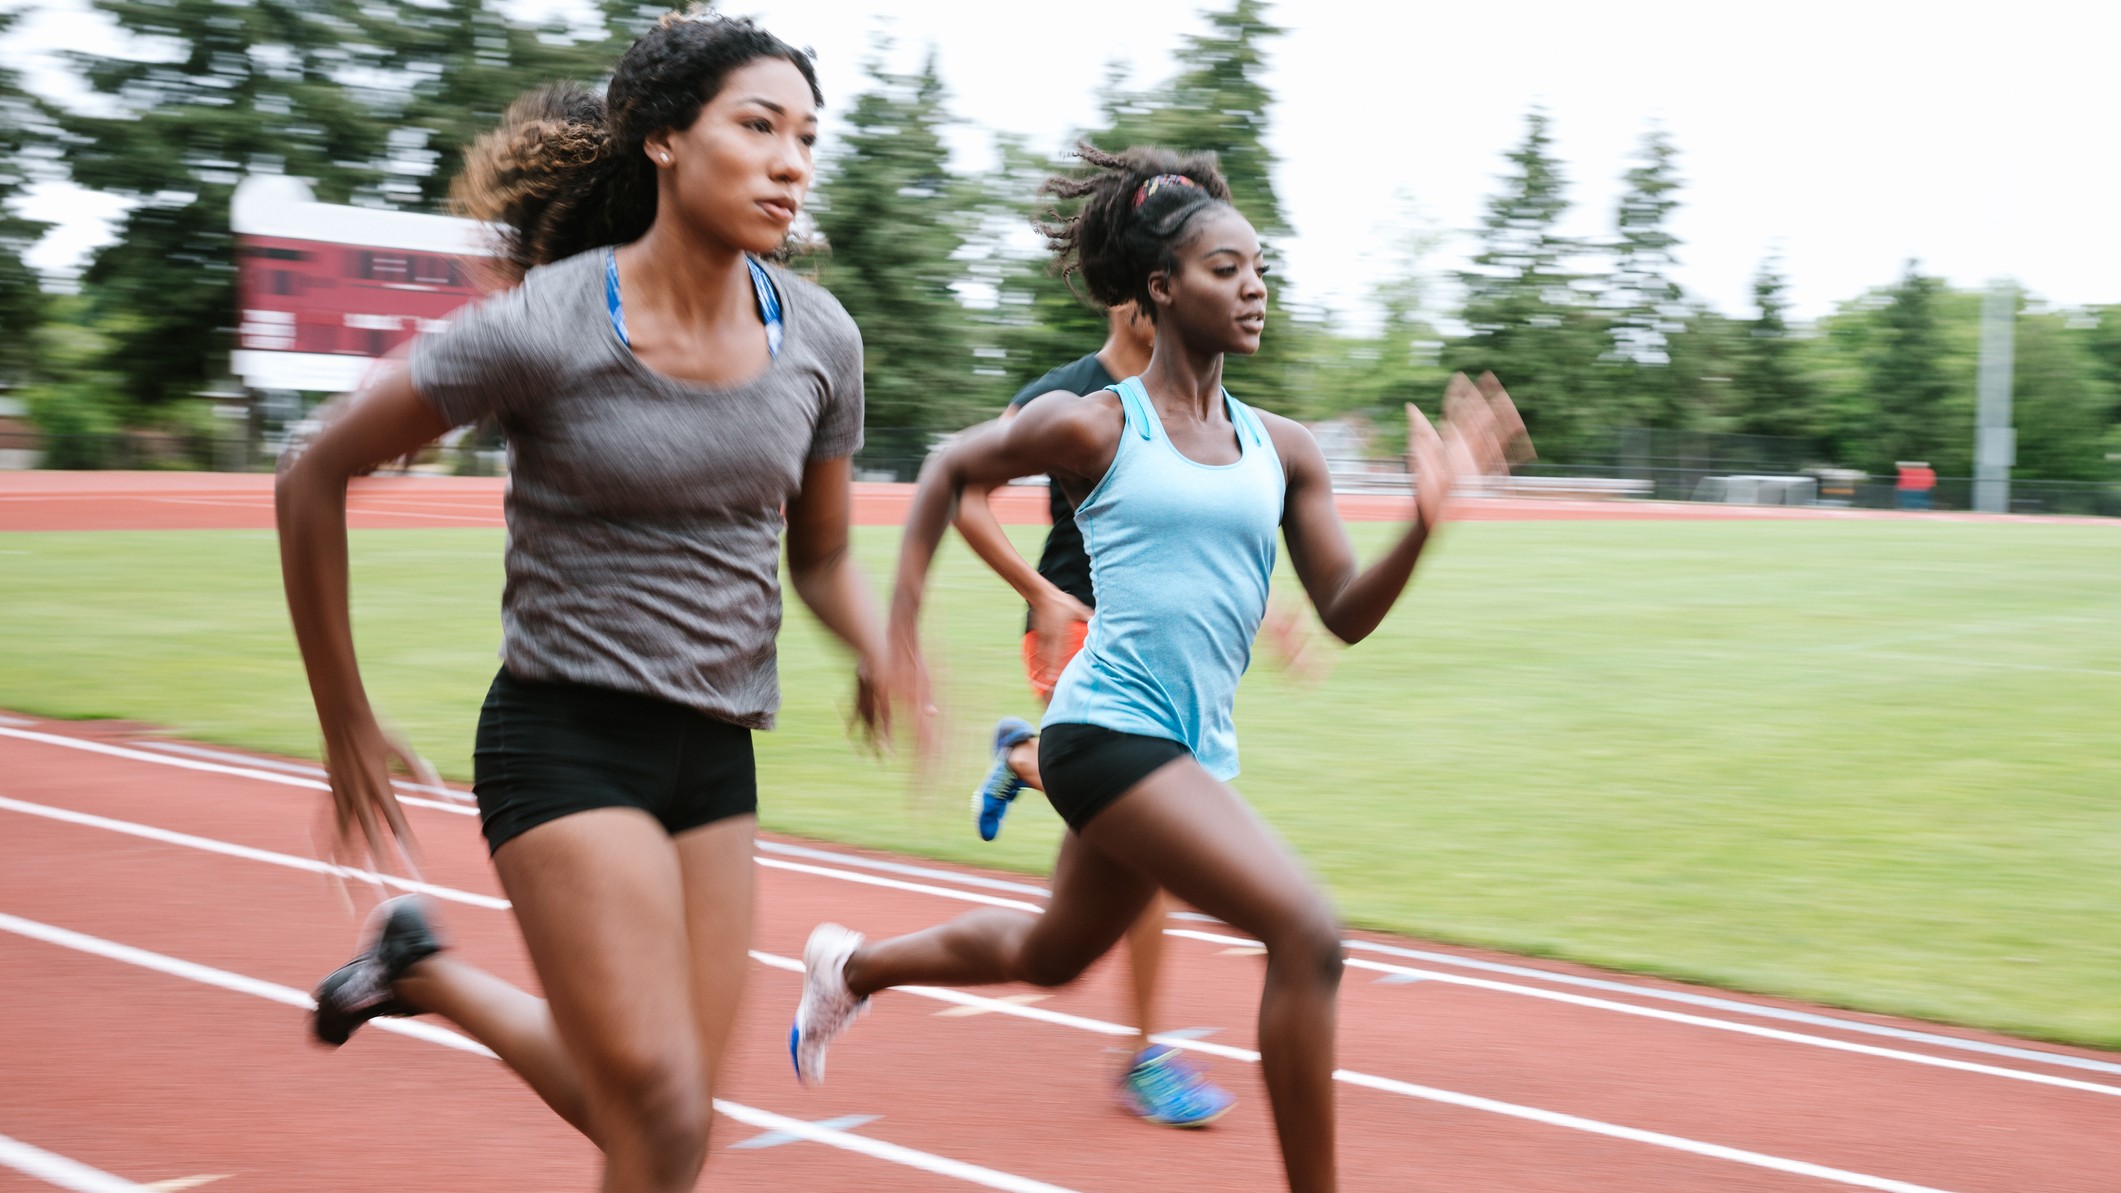 Women running on a running track